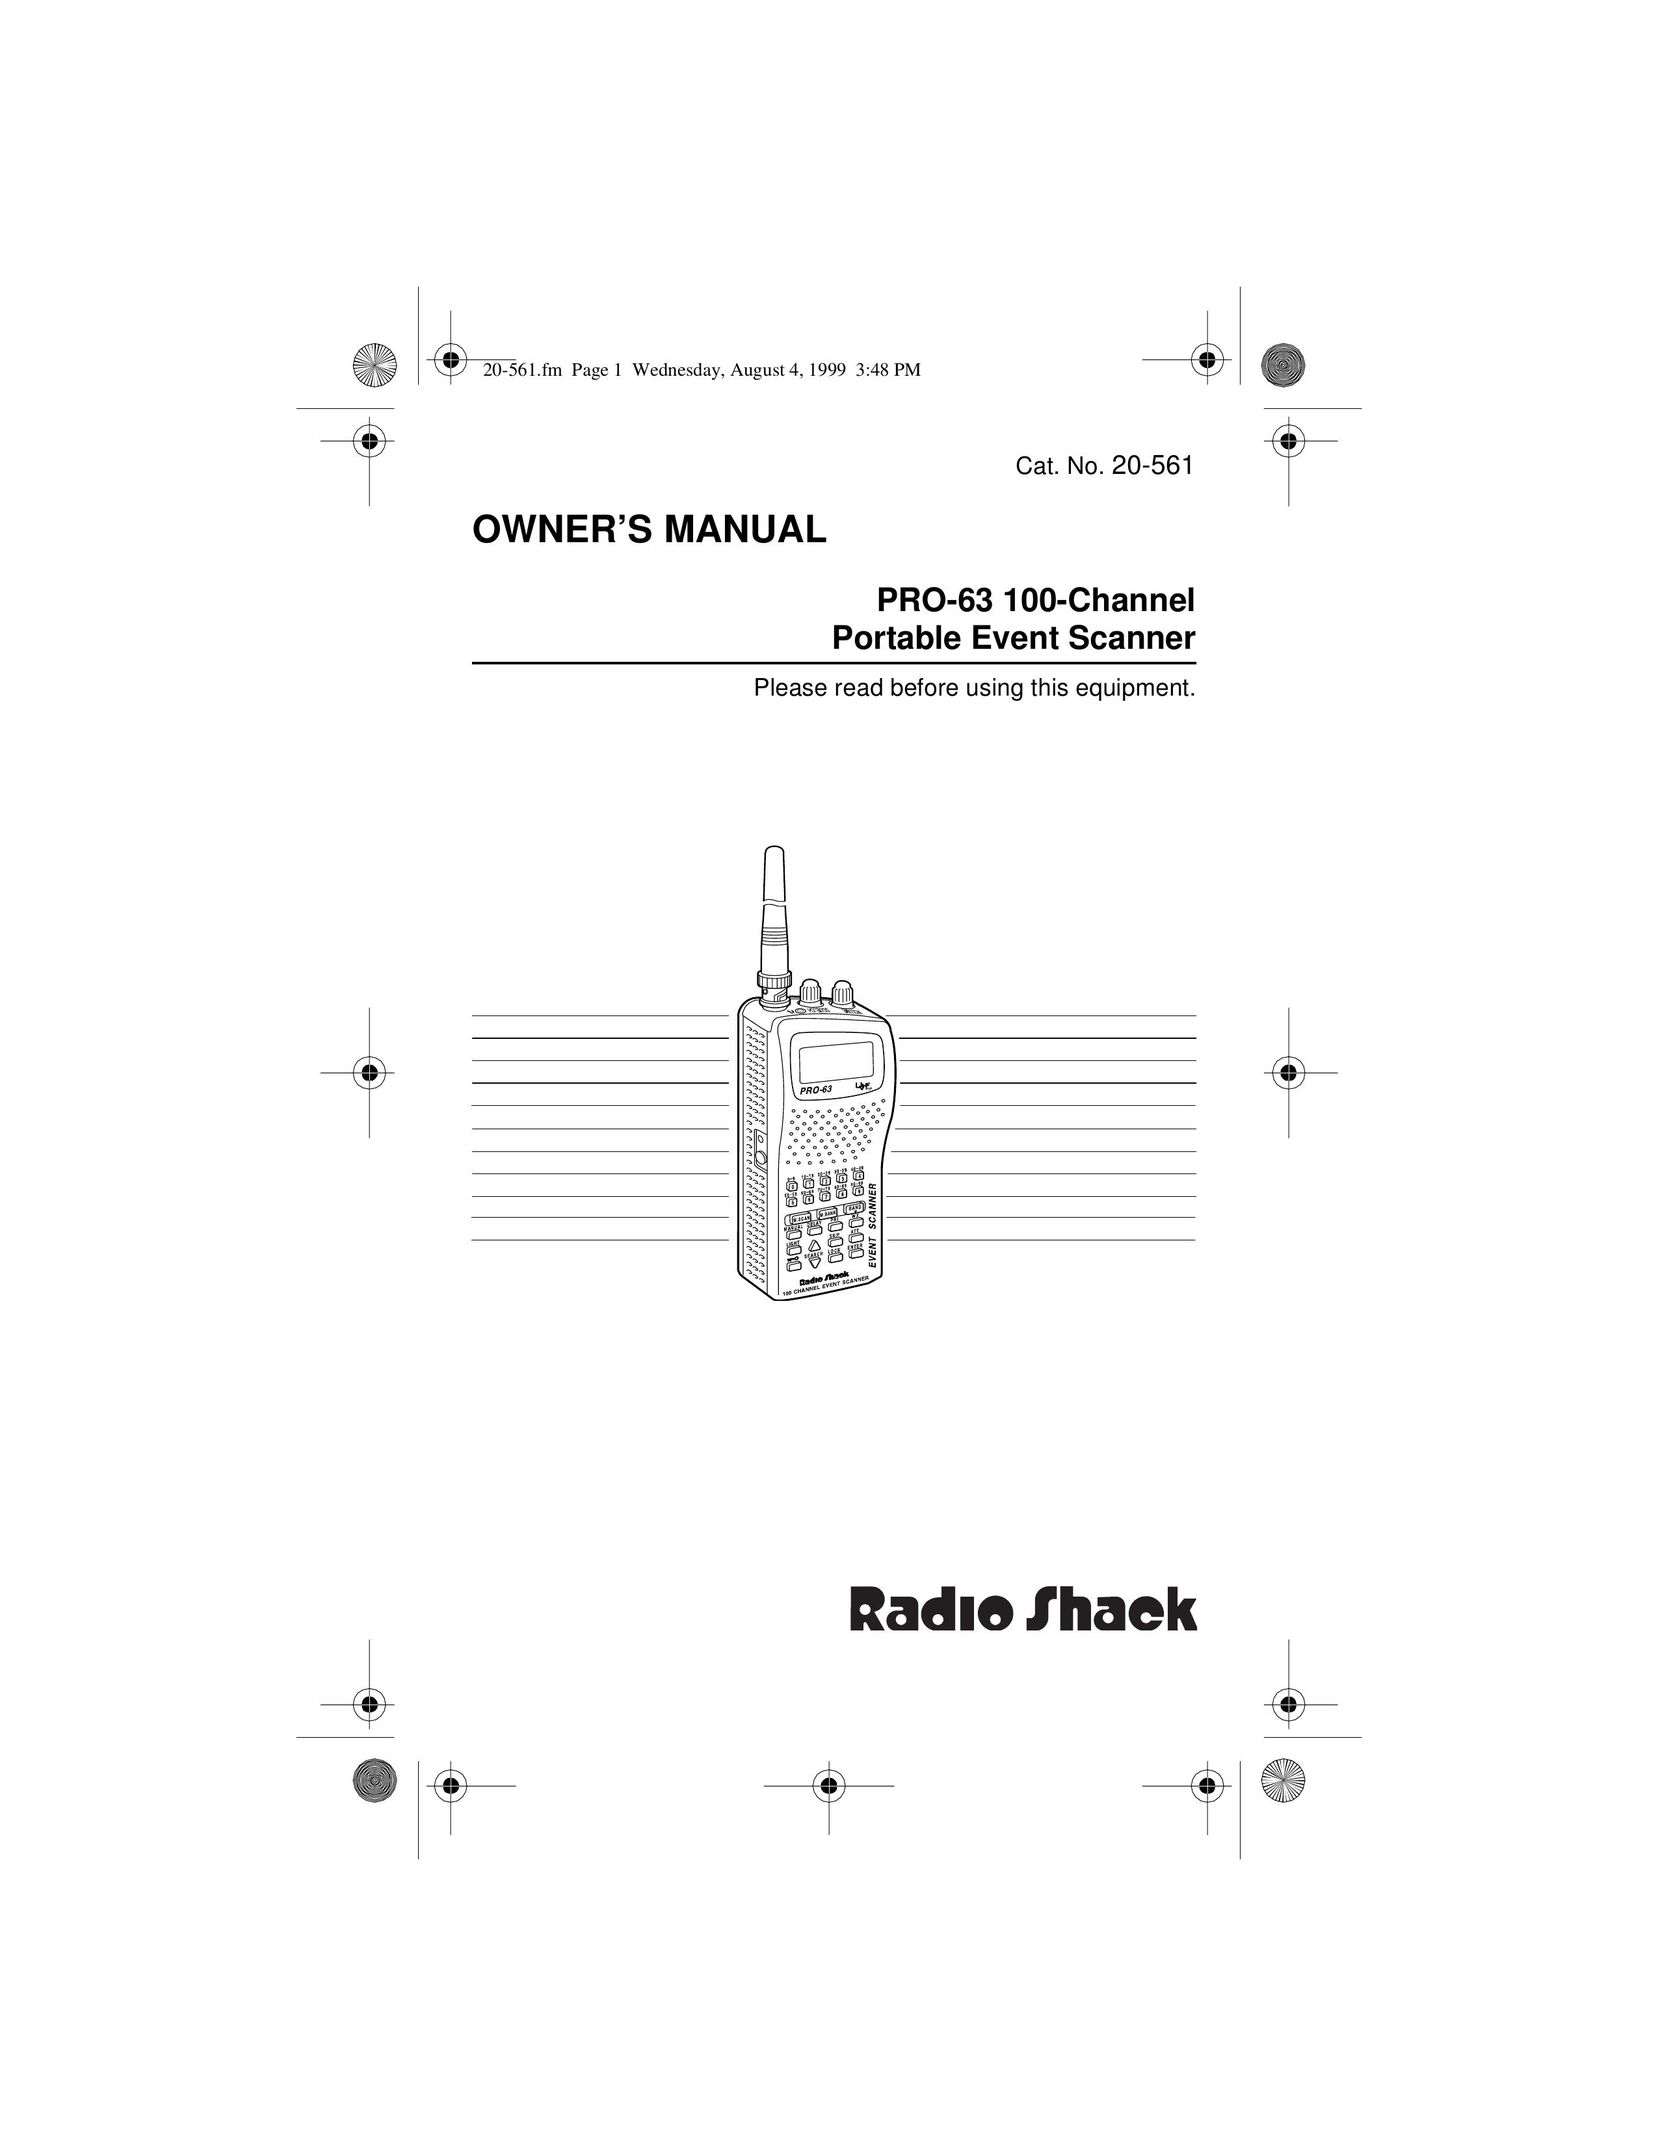 Radio Shack PRO-63 Scanner User Manual